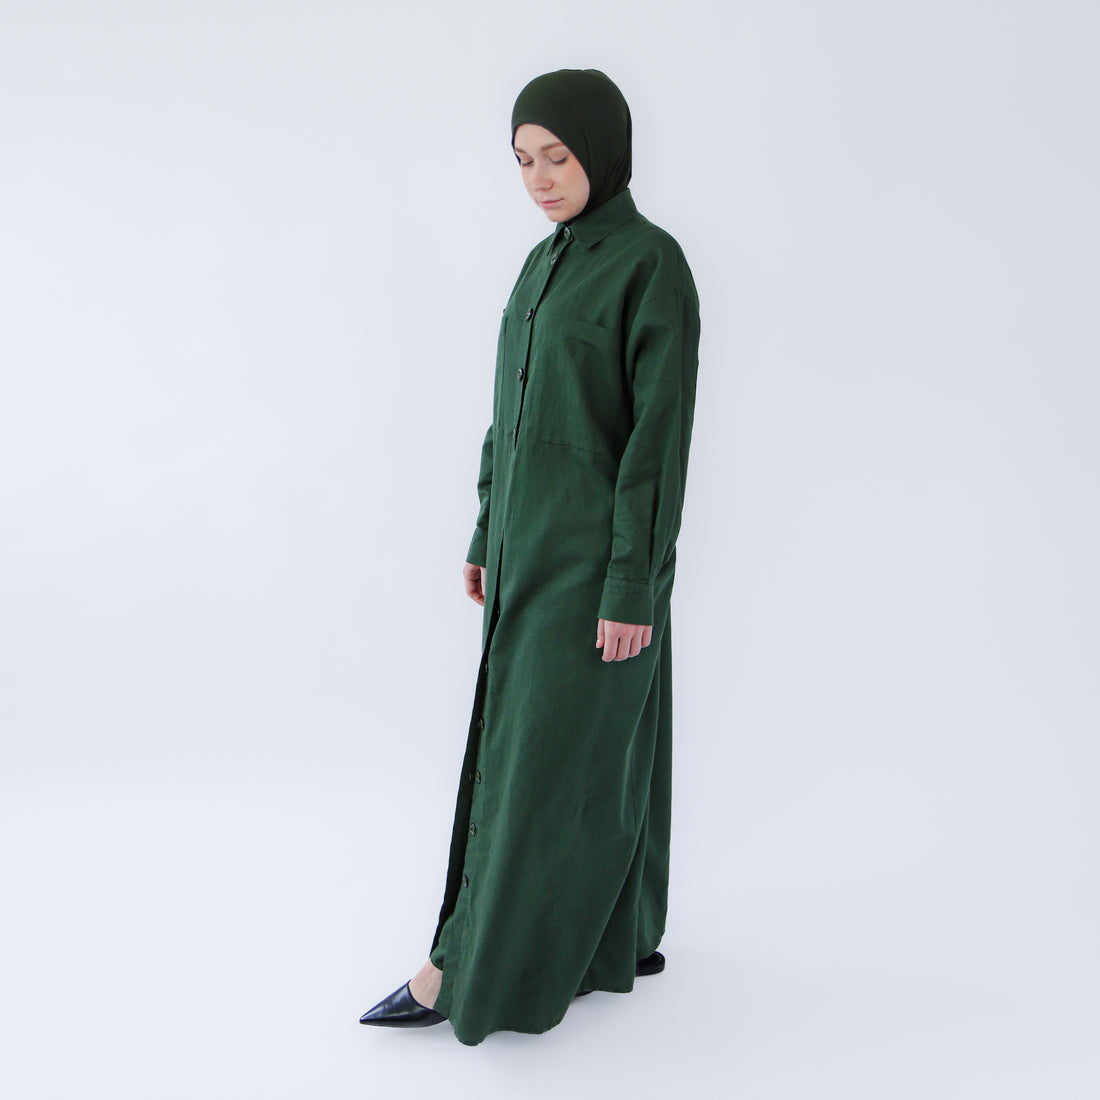 Abaya dress style maxi dress for women with wide trousers "Khaki Linen" 1